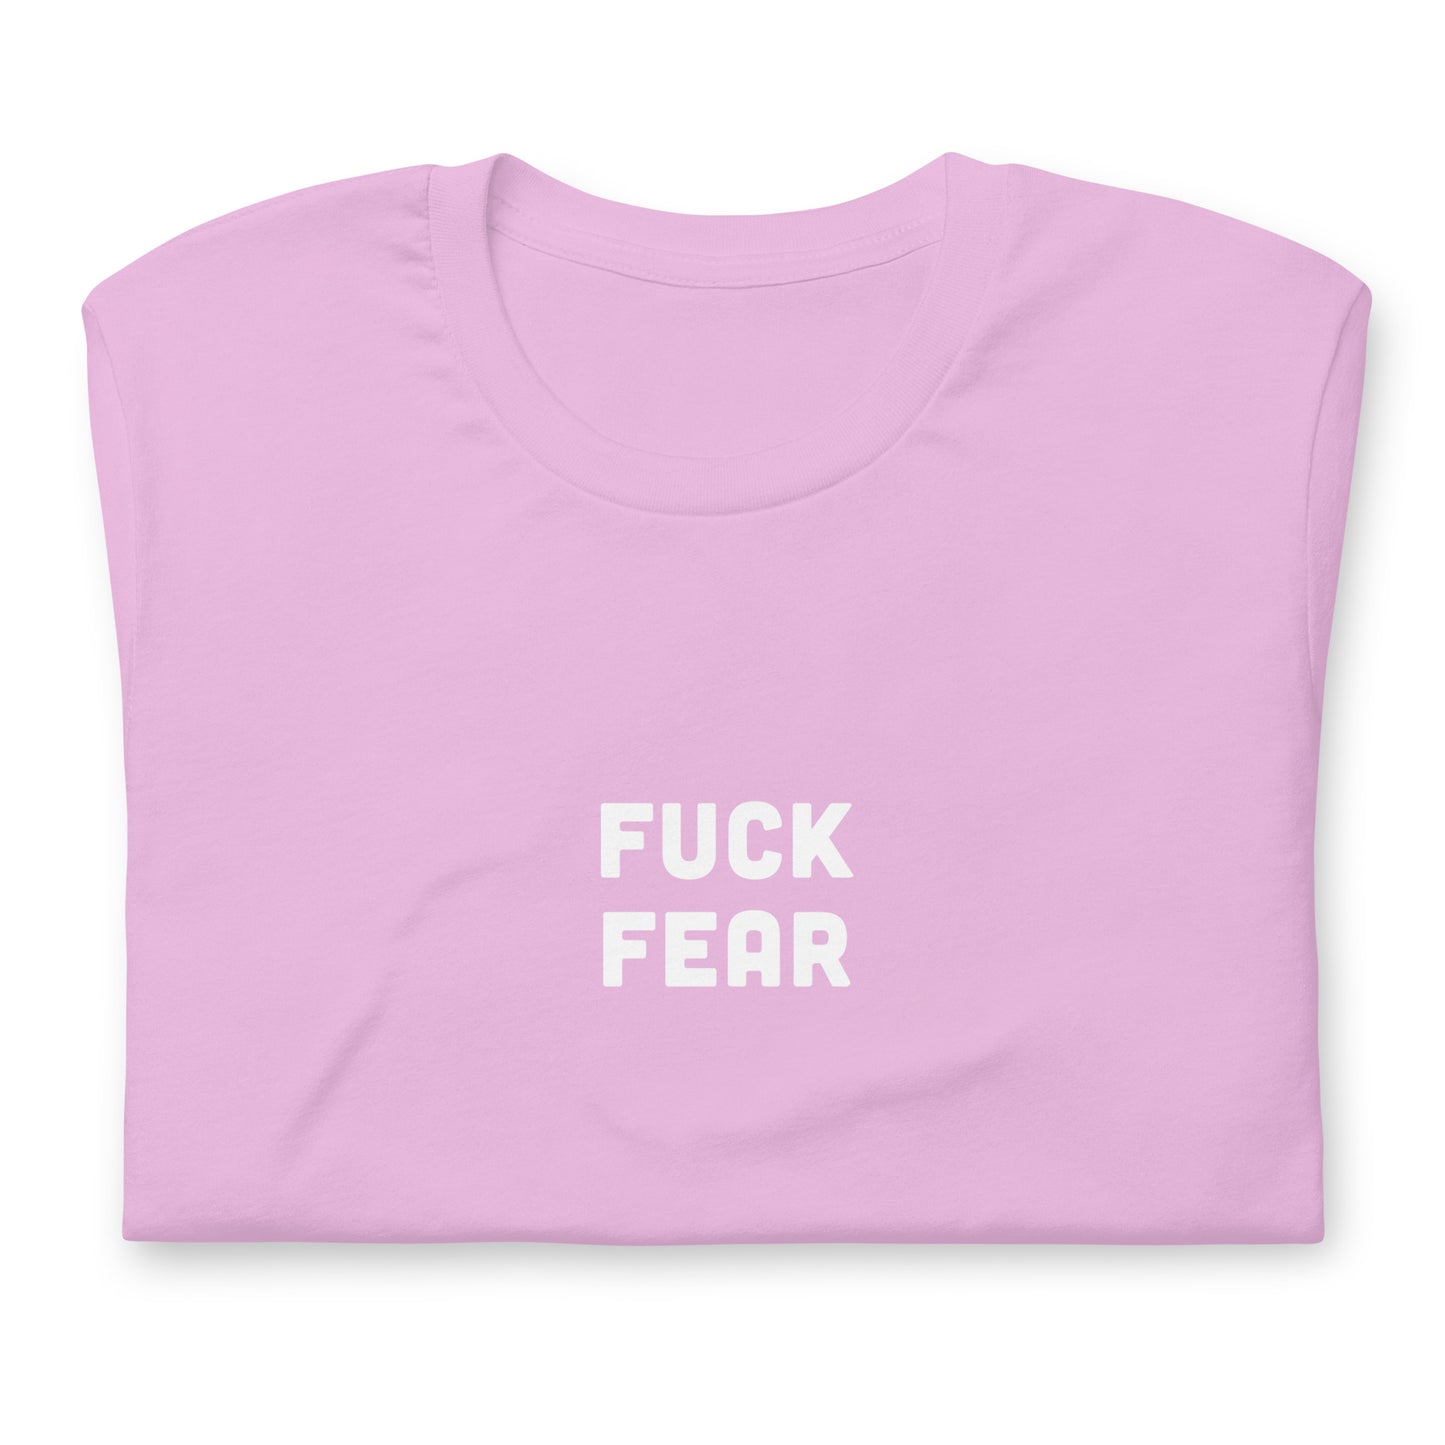 Fuck Fear T-Shirt Size 2XL Color Forest